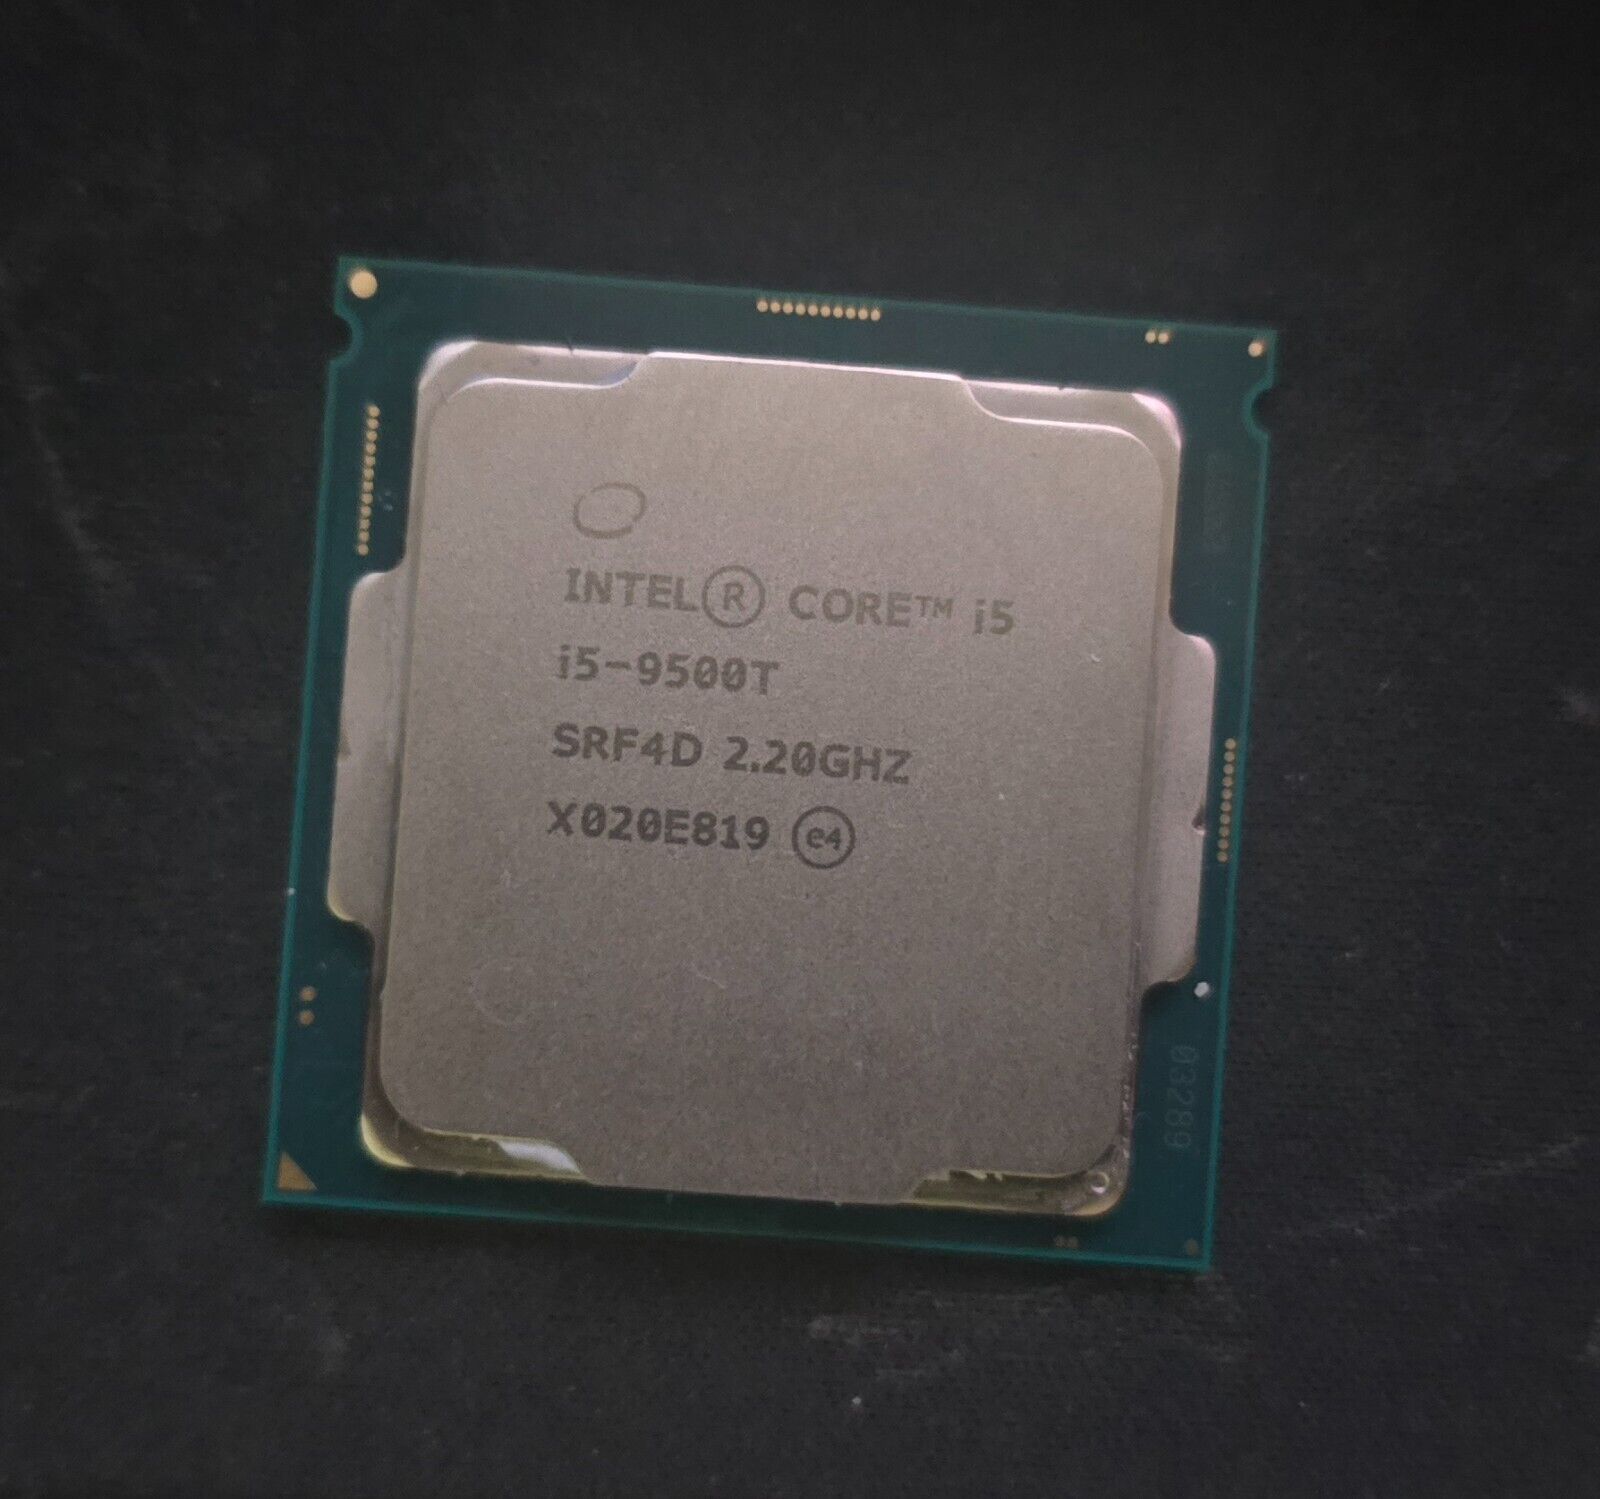 Intel Core i5-9500t 2.2ghz Processor (SRF4D)